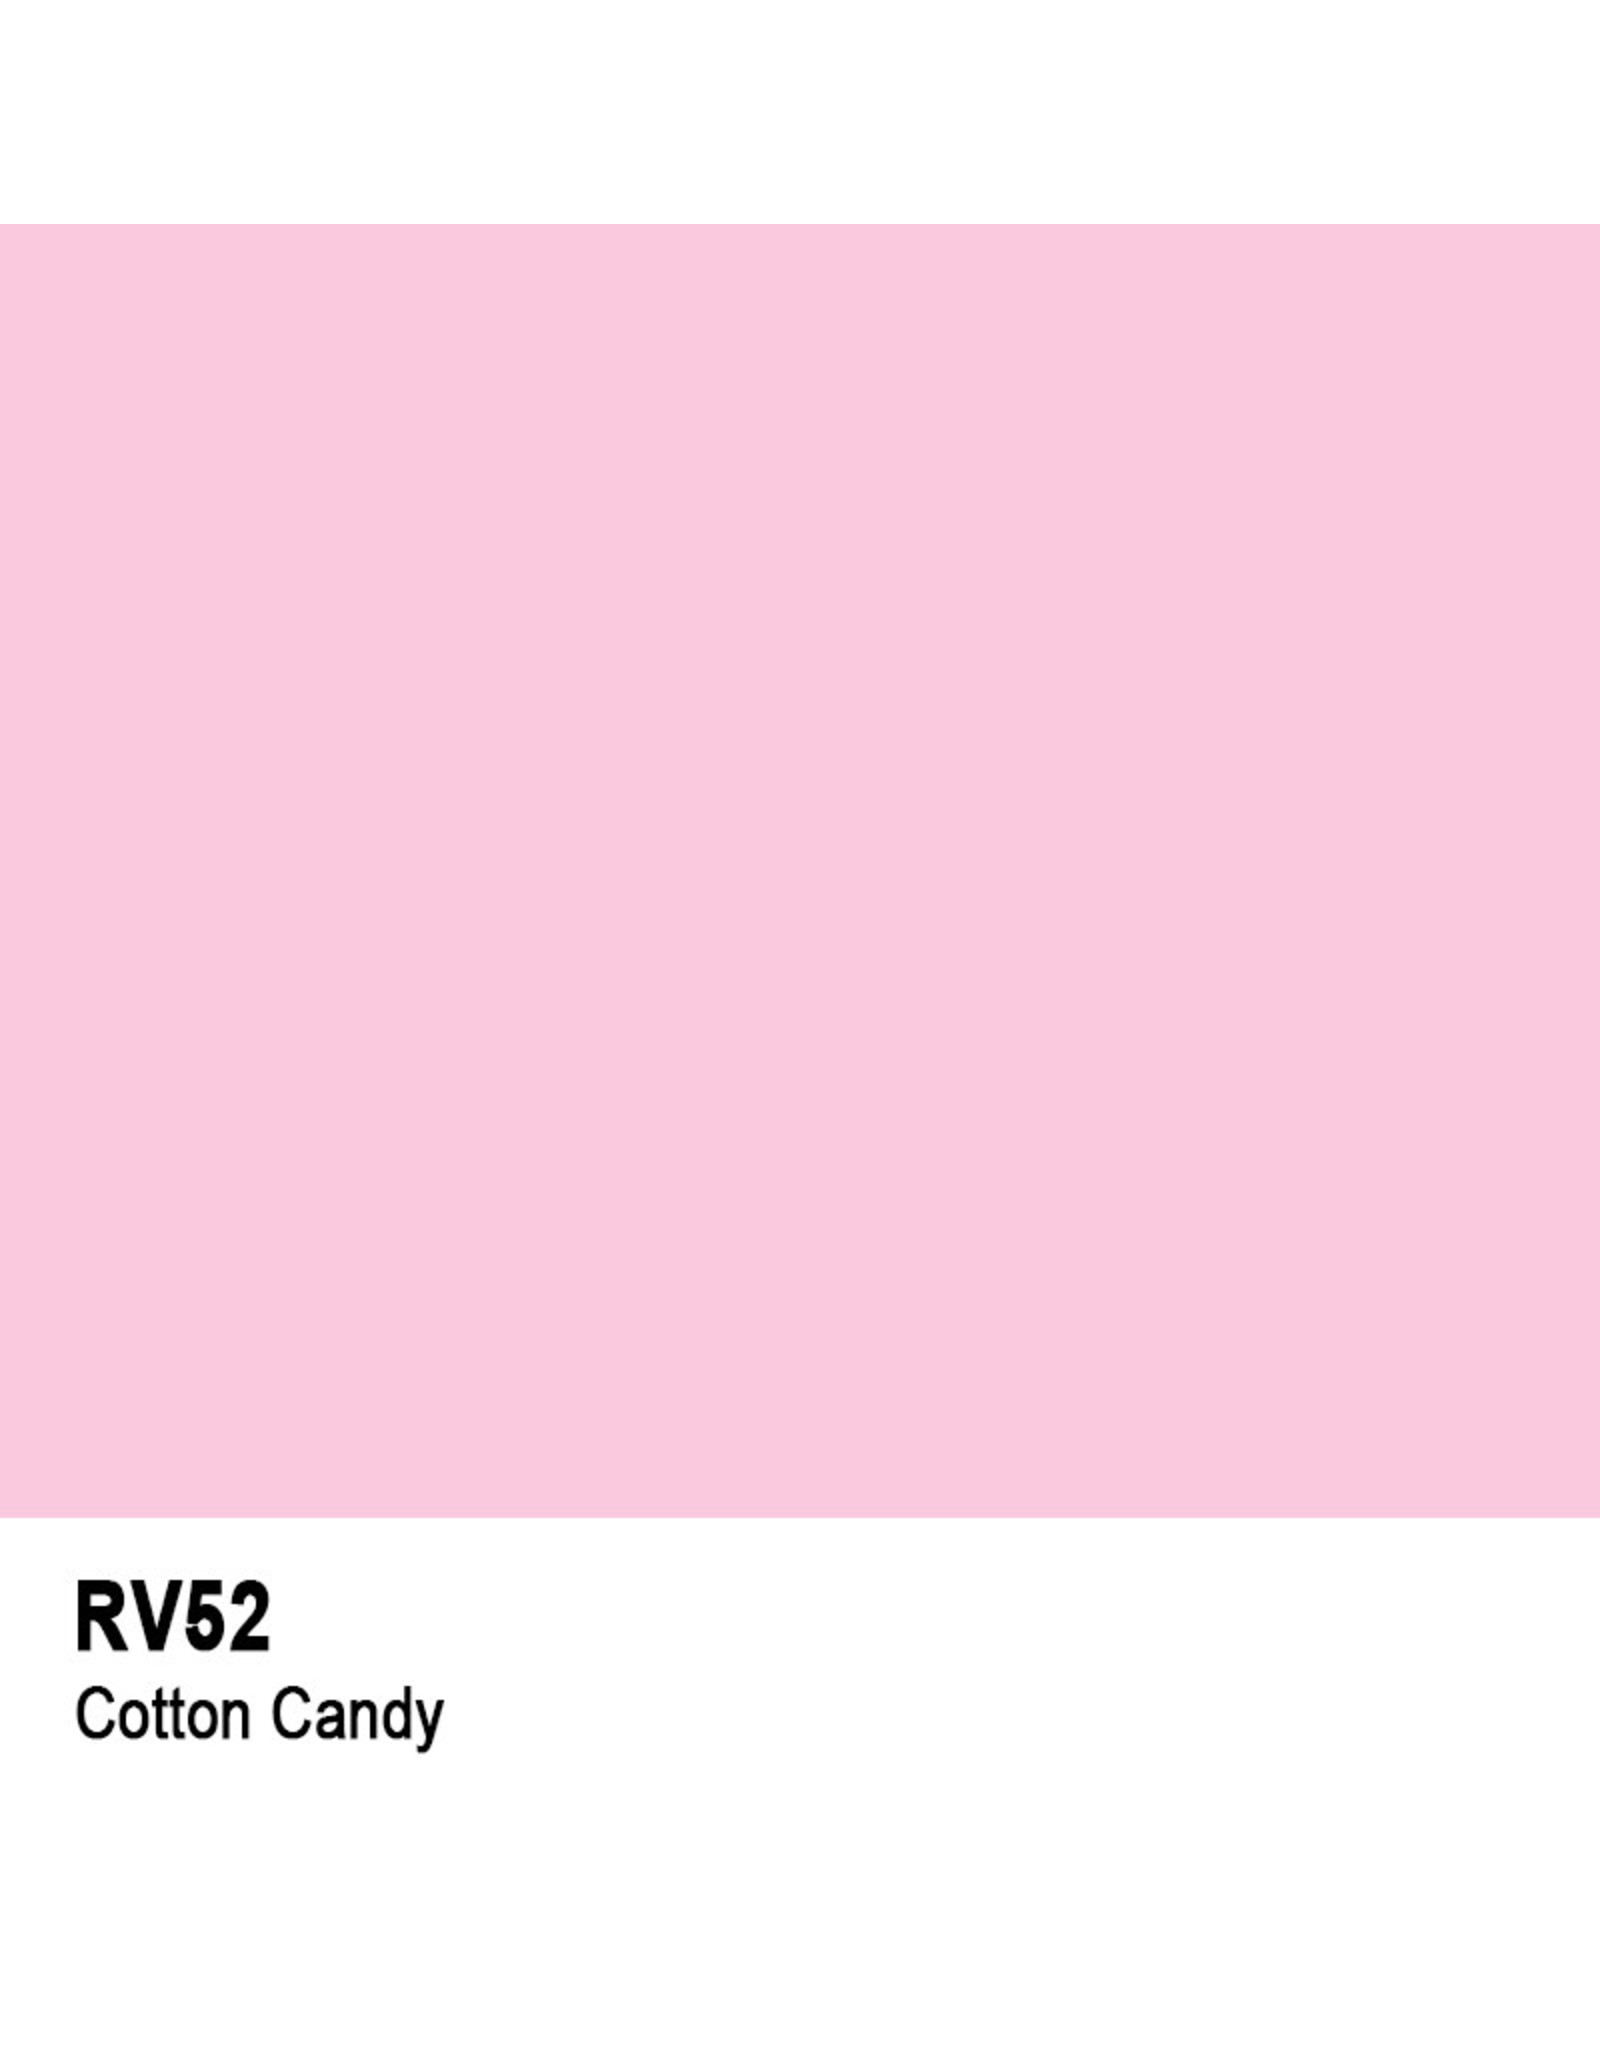 COPIC COPIC RV52 COTTON CANDY SKETCH MARKER